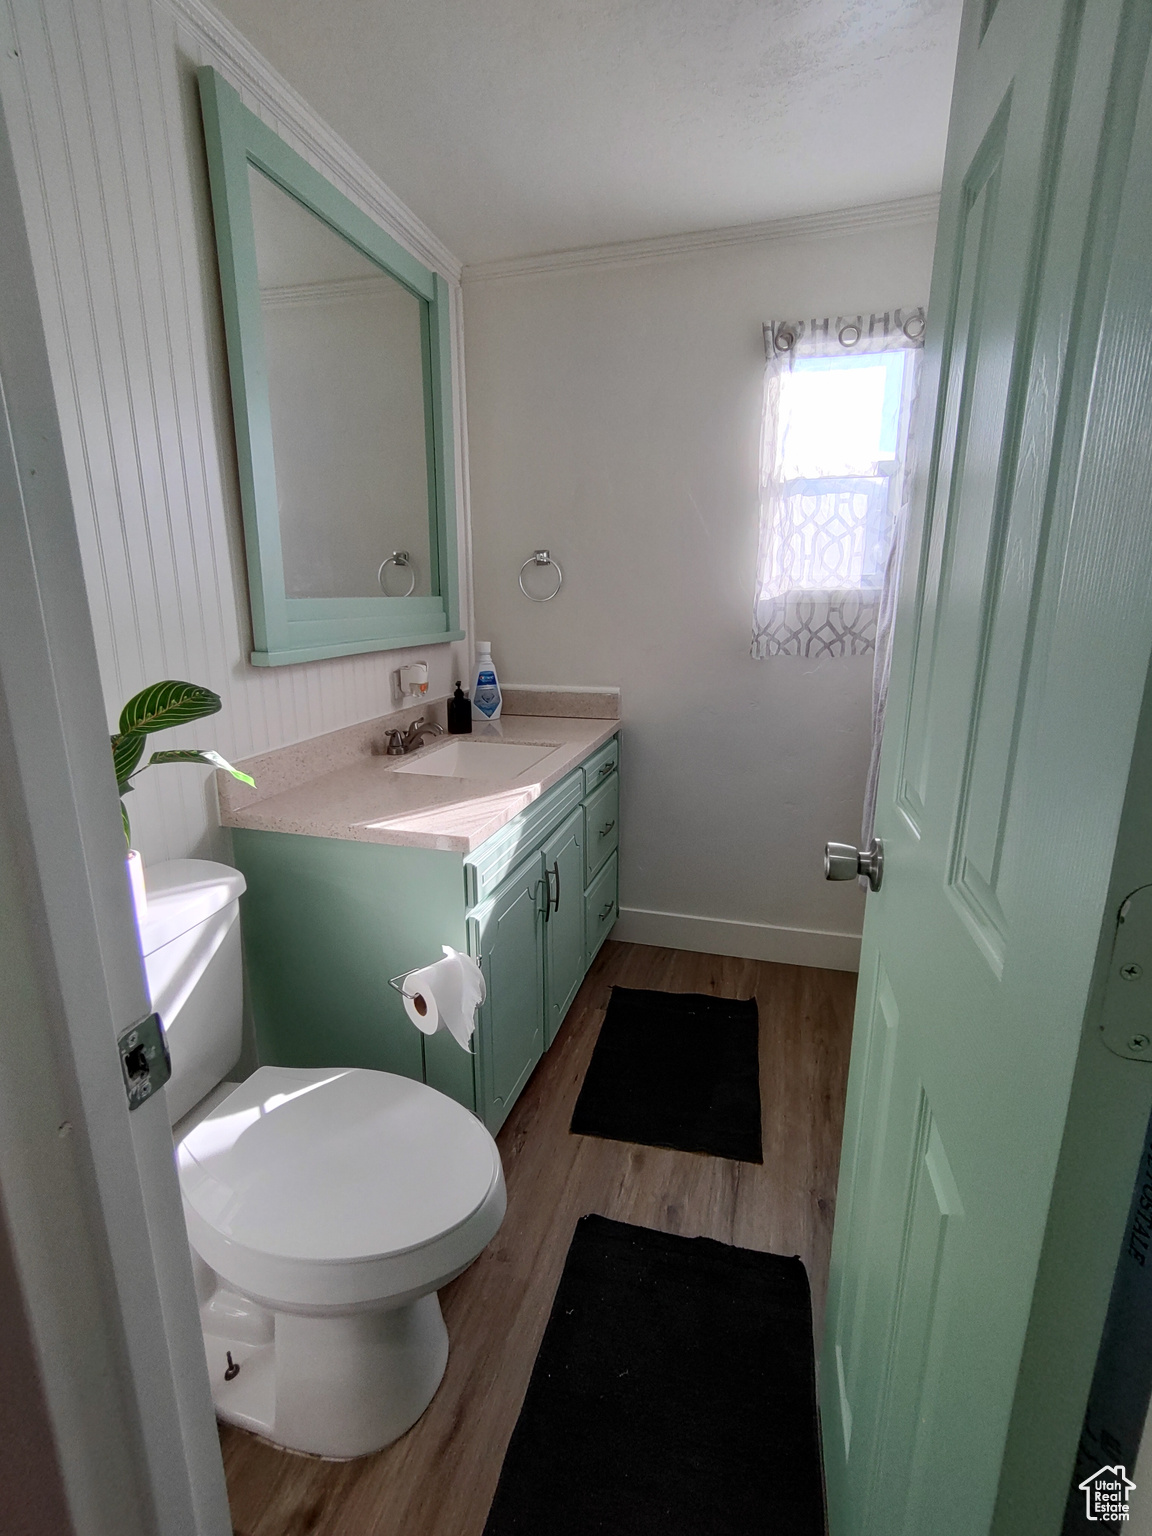 Bathroom with wood-type flooring, toilet, and vanity